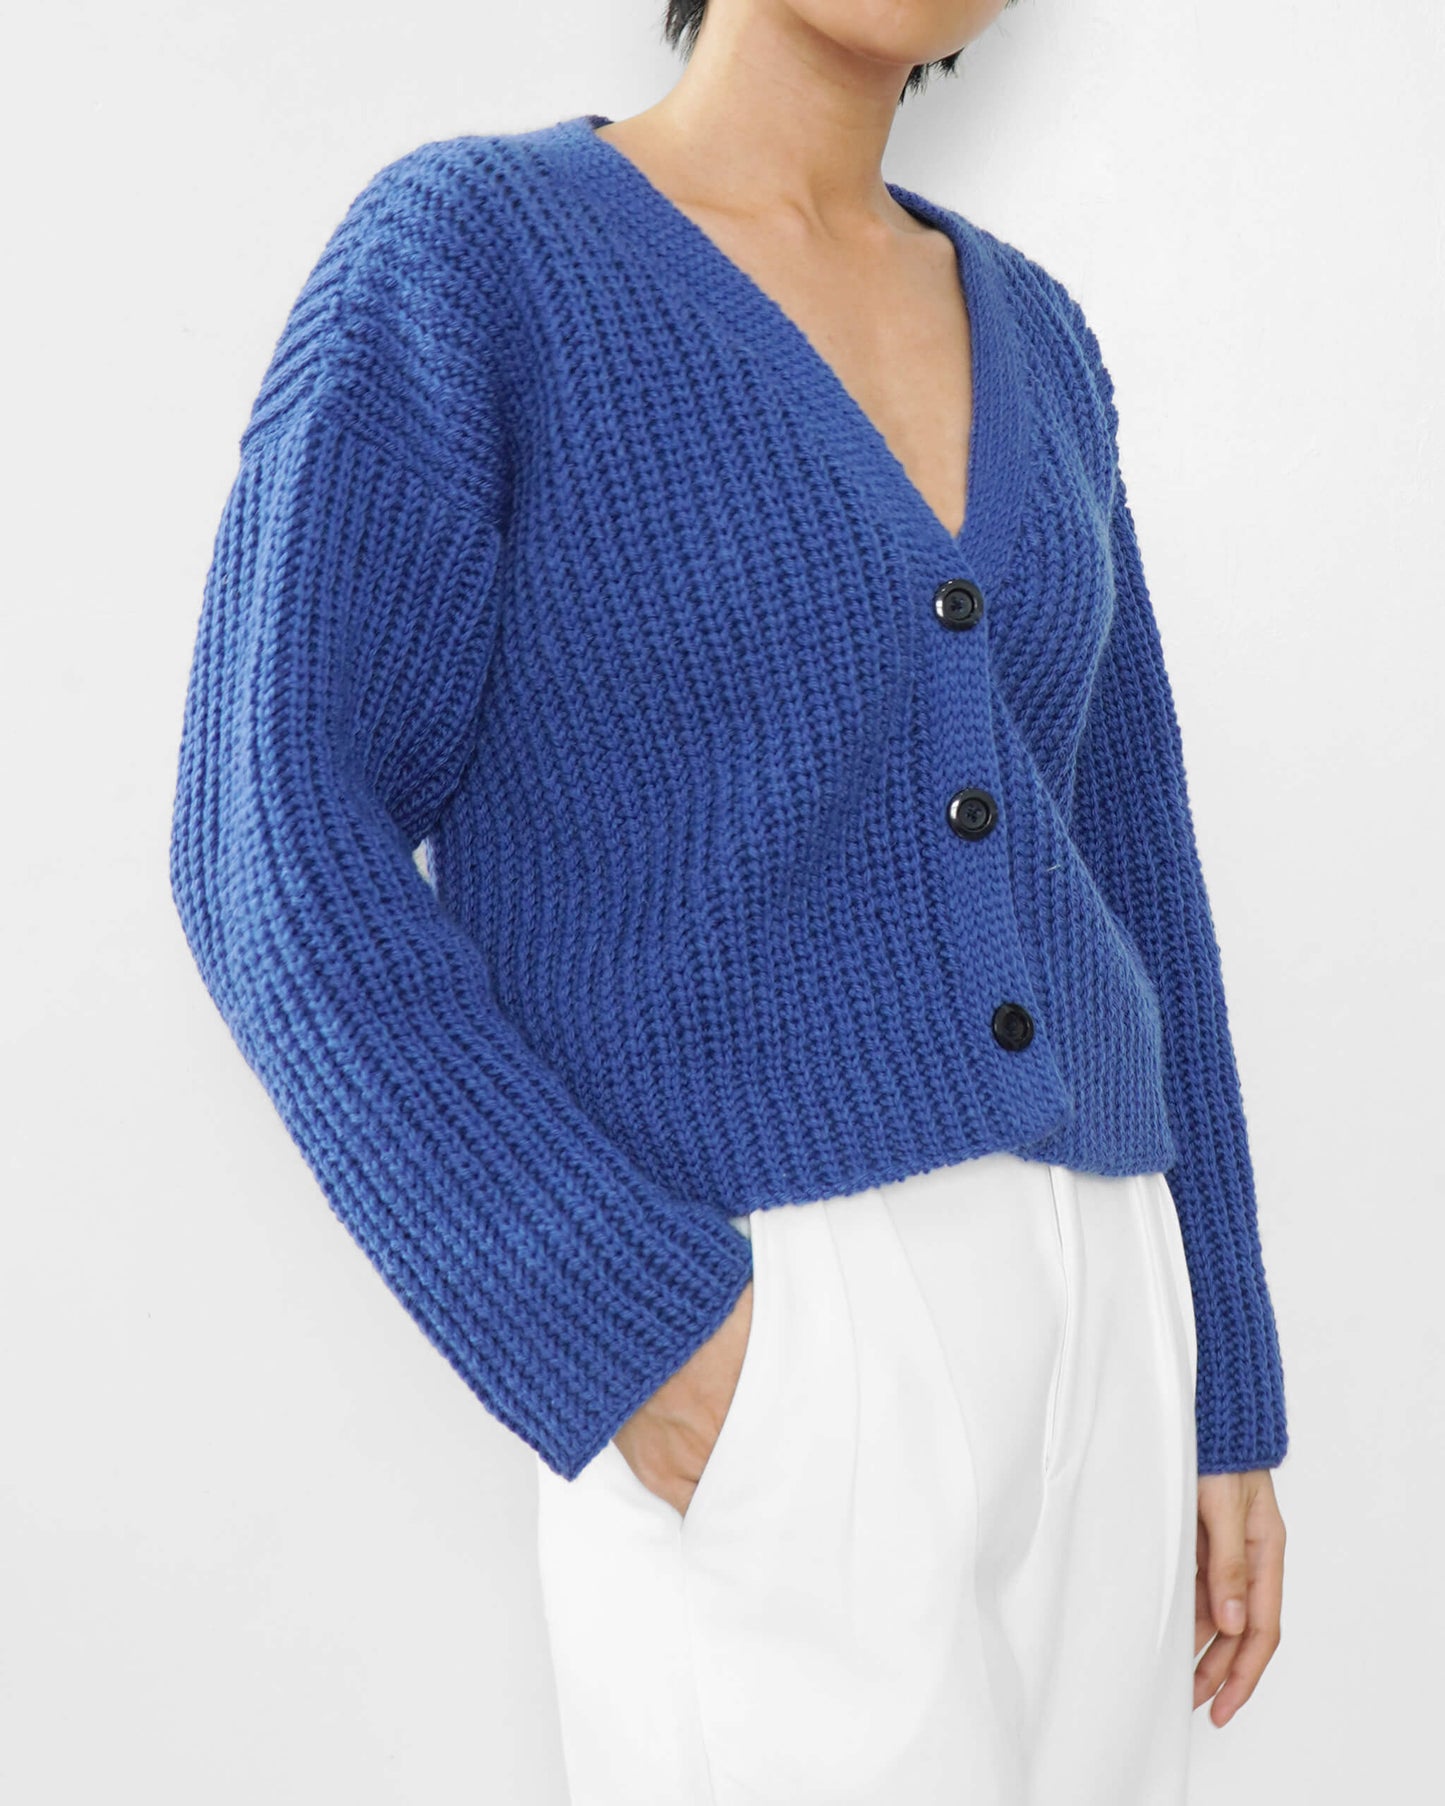 Cardigan No.27 | Crochet pattern